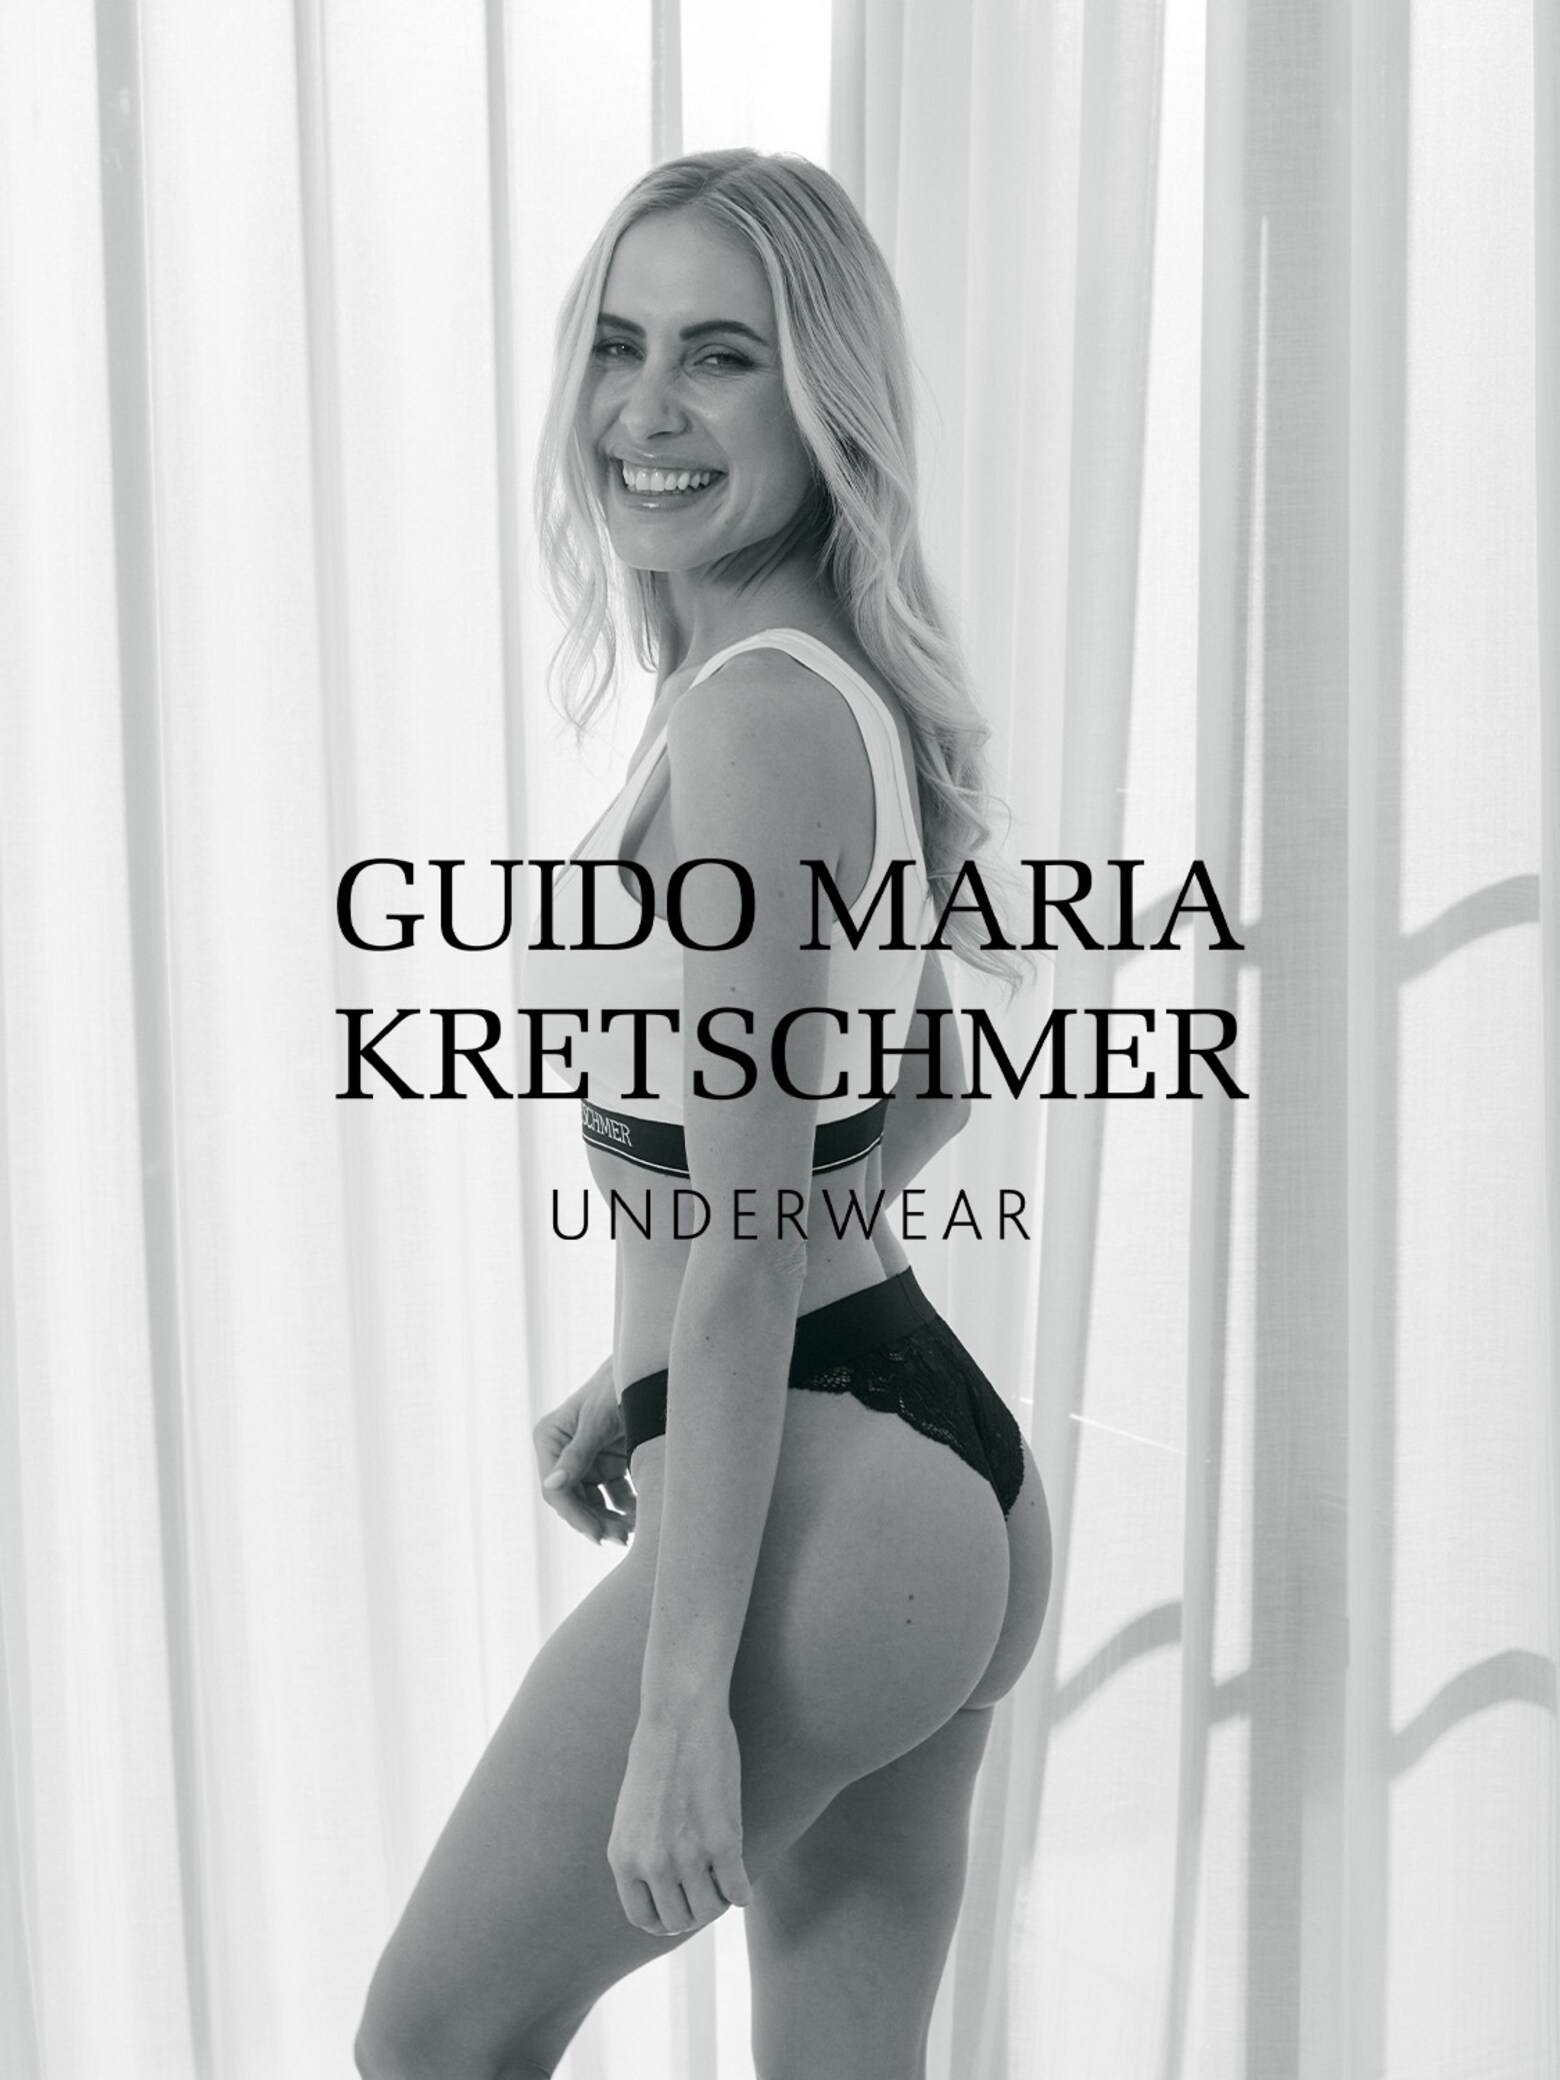 The underwear collection Guido Maria Kretschmer Women